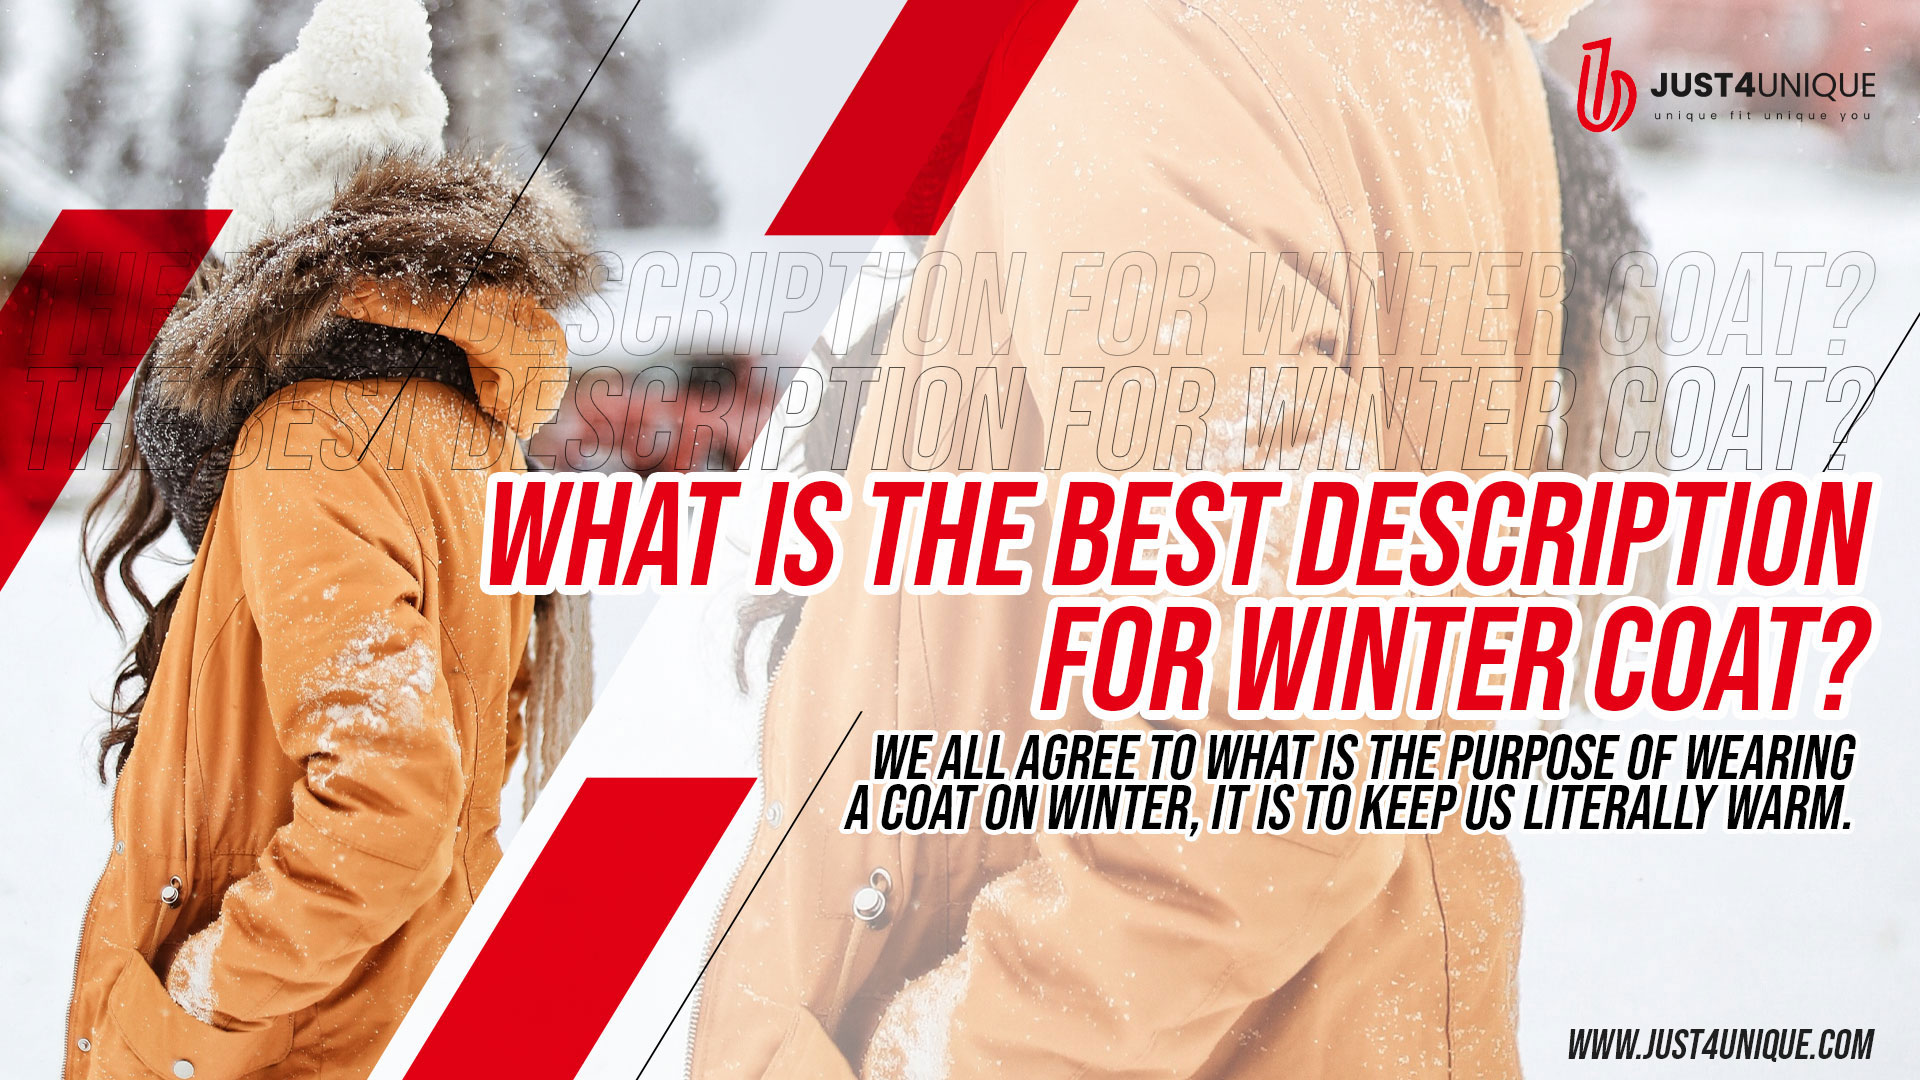 What is the Best Description for Winter Coat